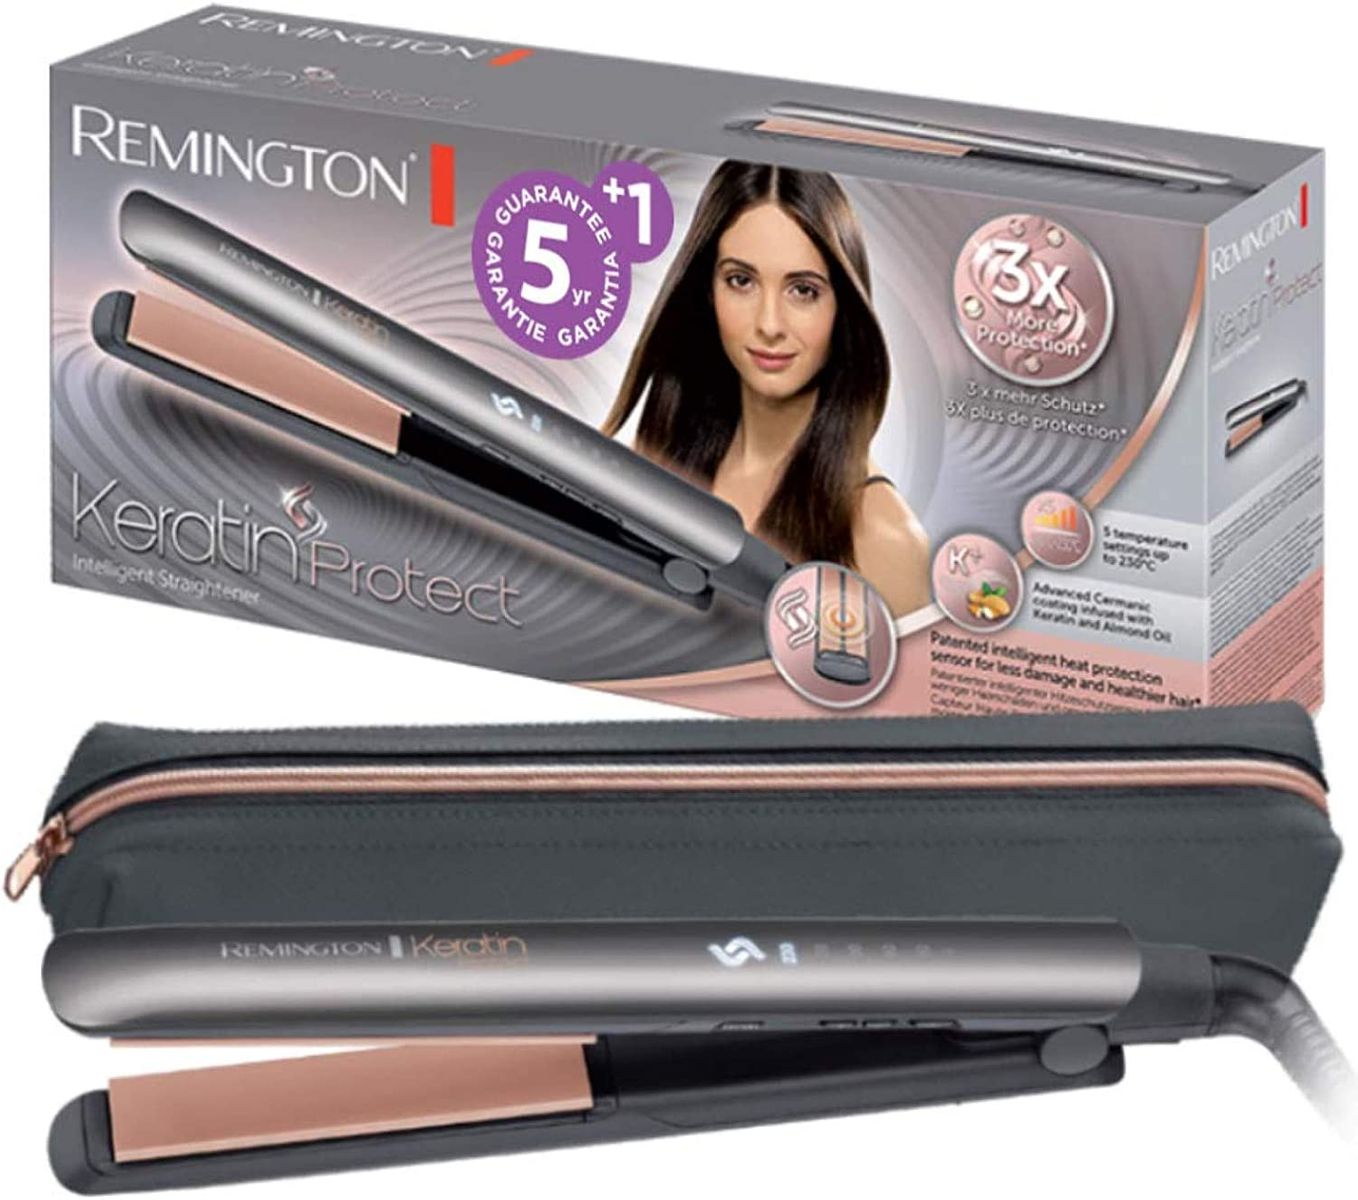 Remington Glätteisen Keratin Protect patentierter Hitzeschutzsensor für 3x mehr Schutz vor Haarschäden -misst konstant den Feuchtigkeitsgehalt im Haar Digitales Display 160-230°C Haarglätter S8598 Haarglätter Protect